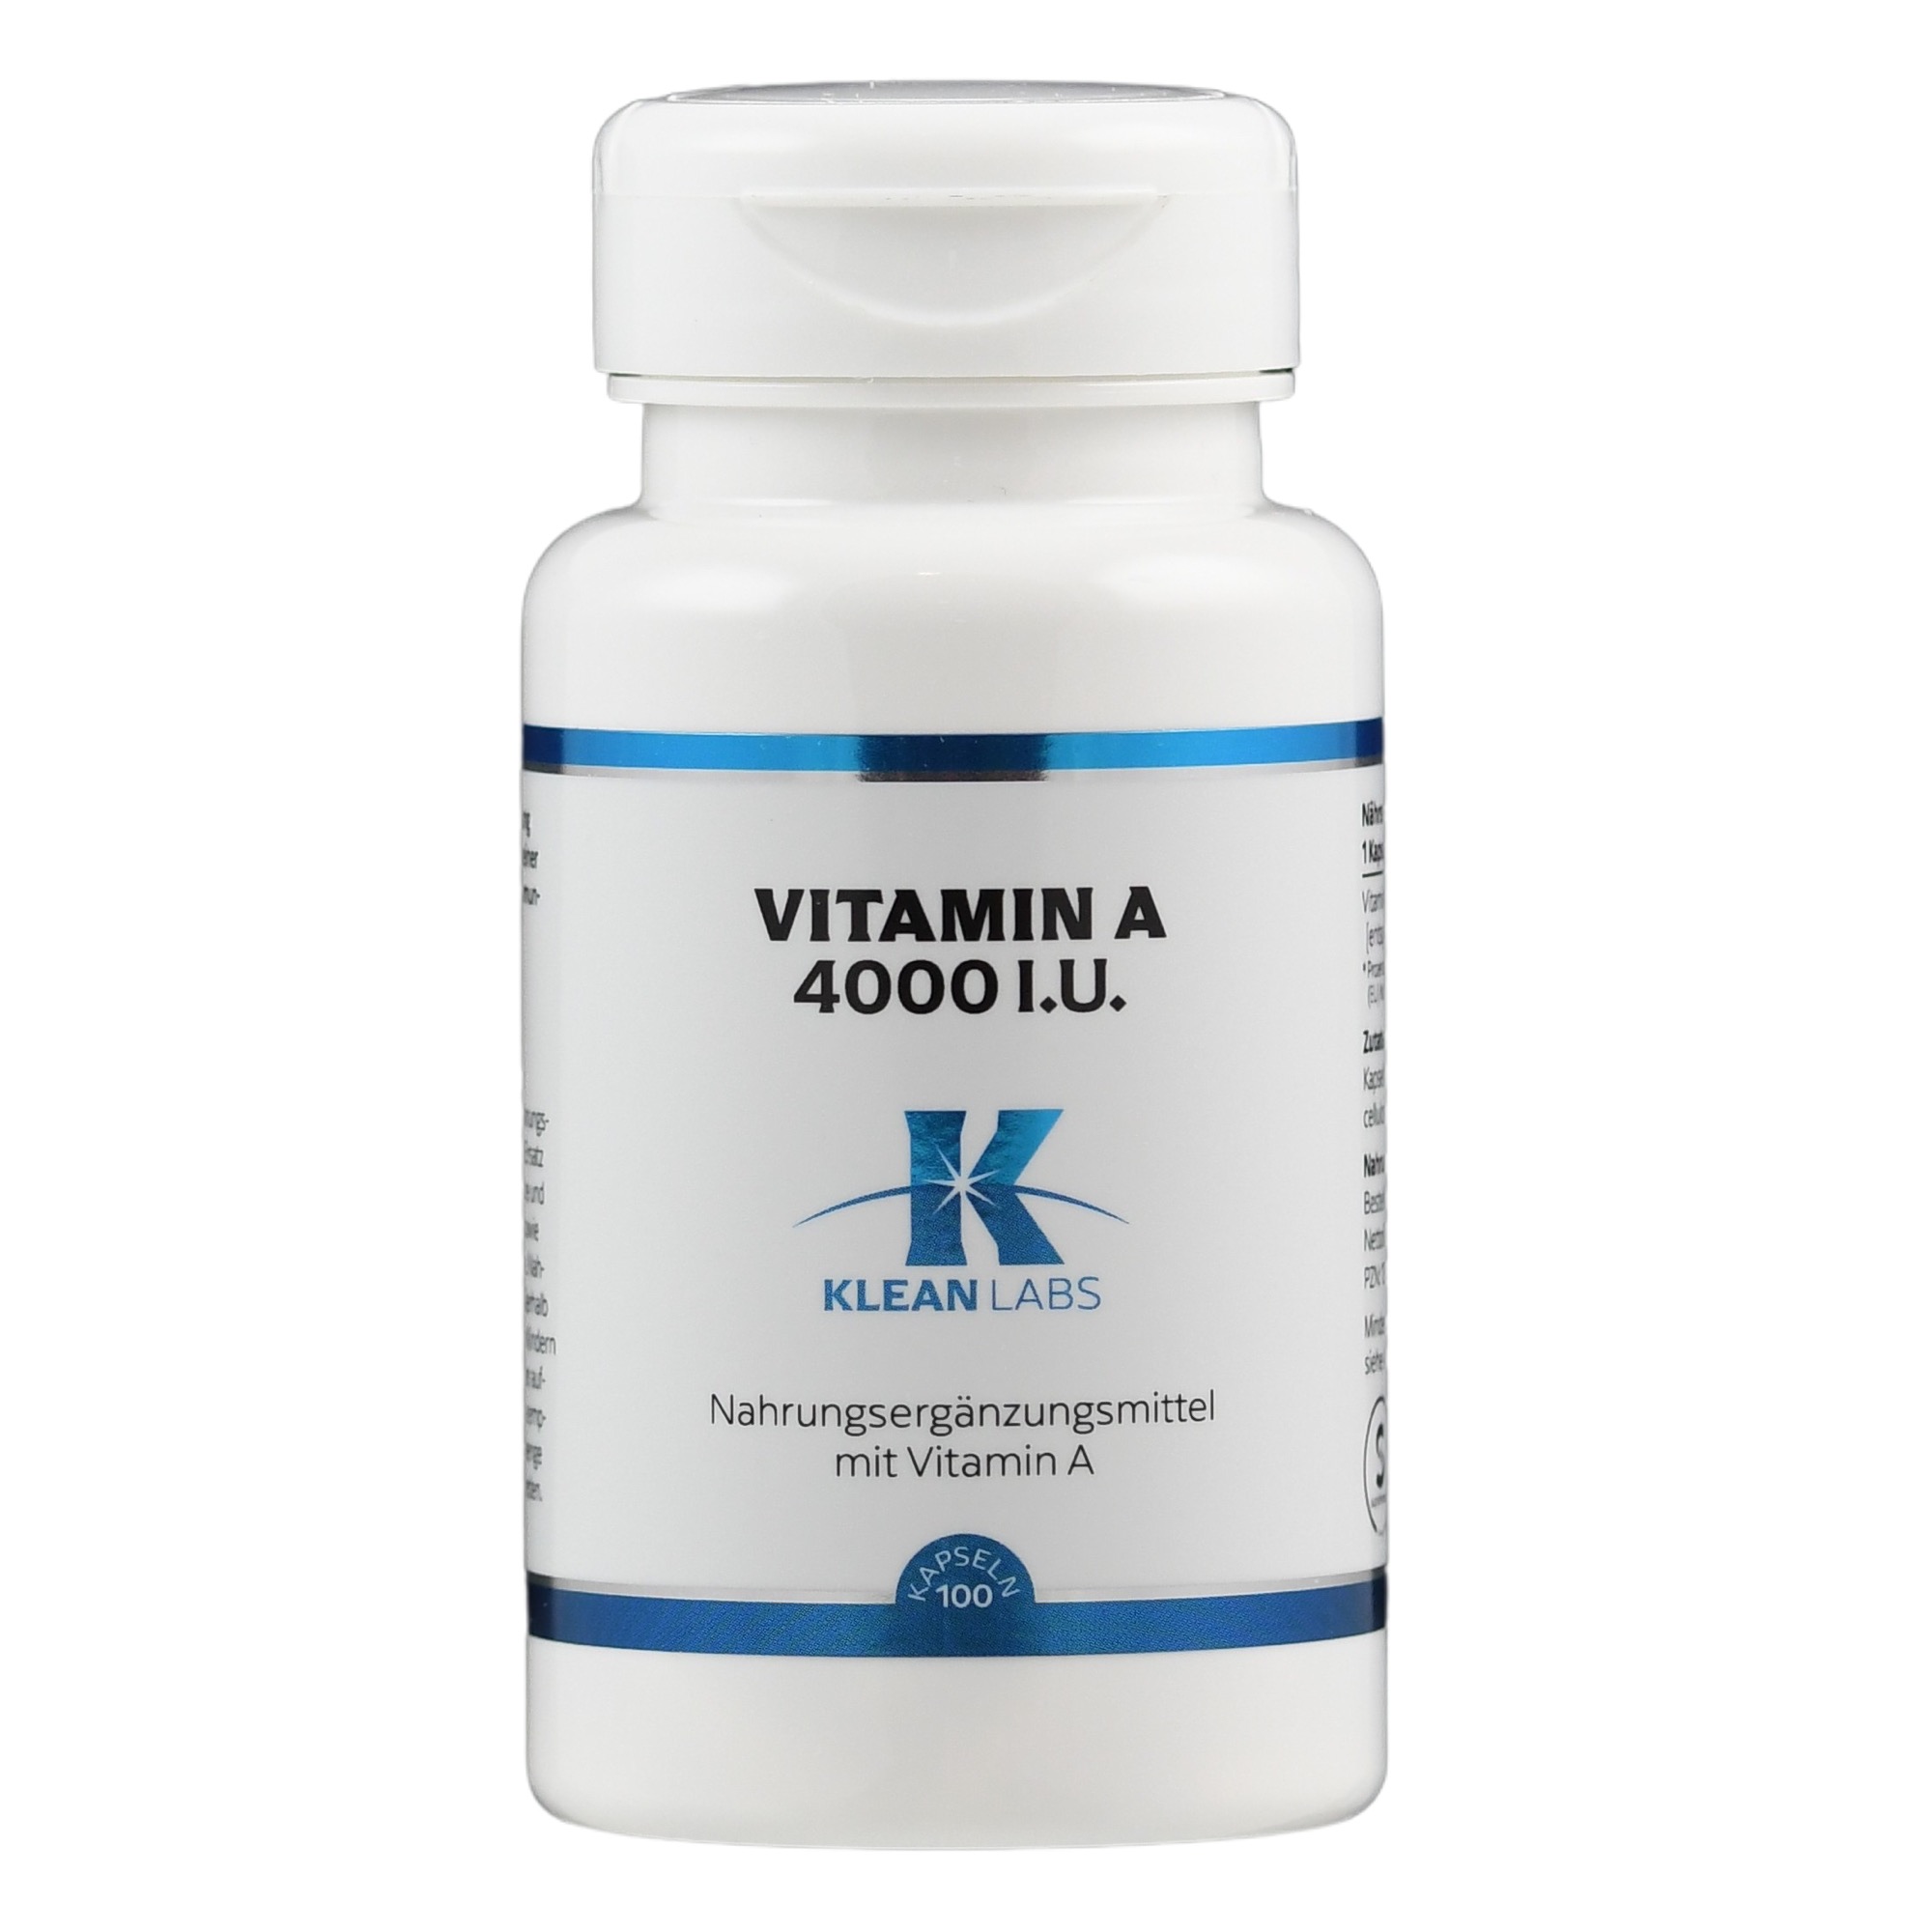 Vitamin A 4000 I.E. von Klean Labs.